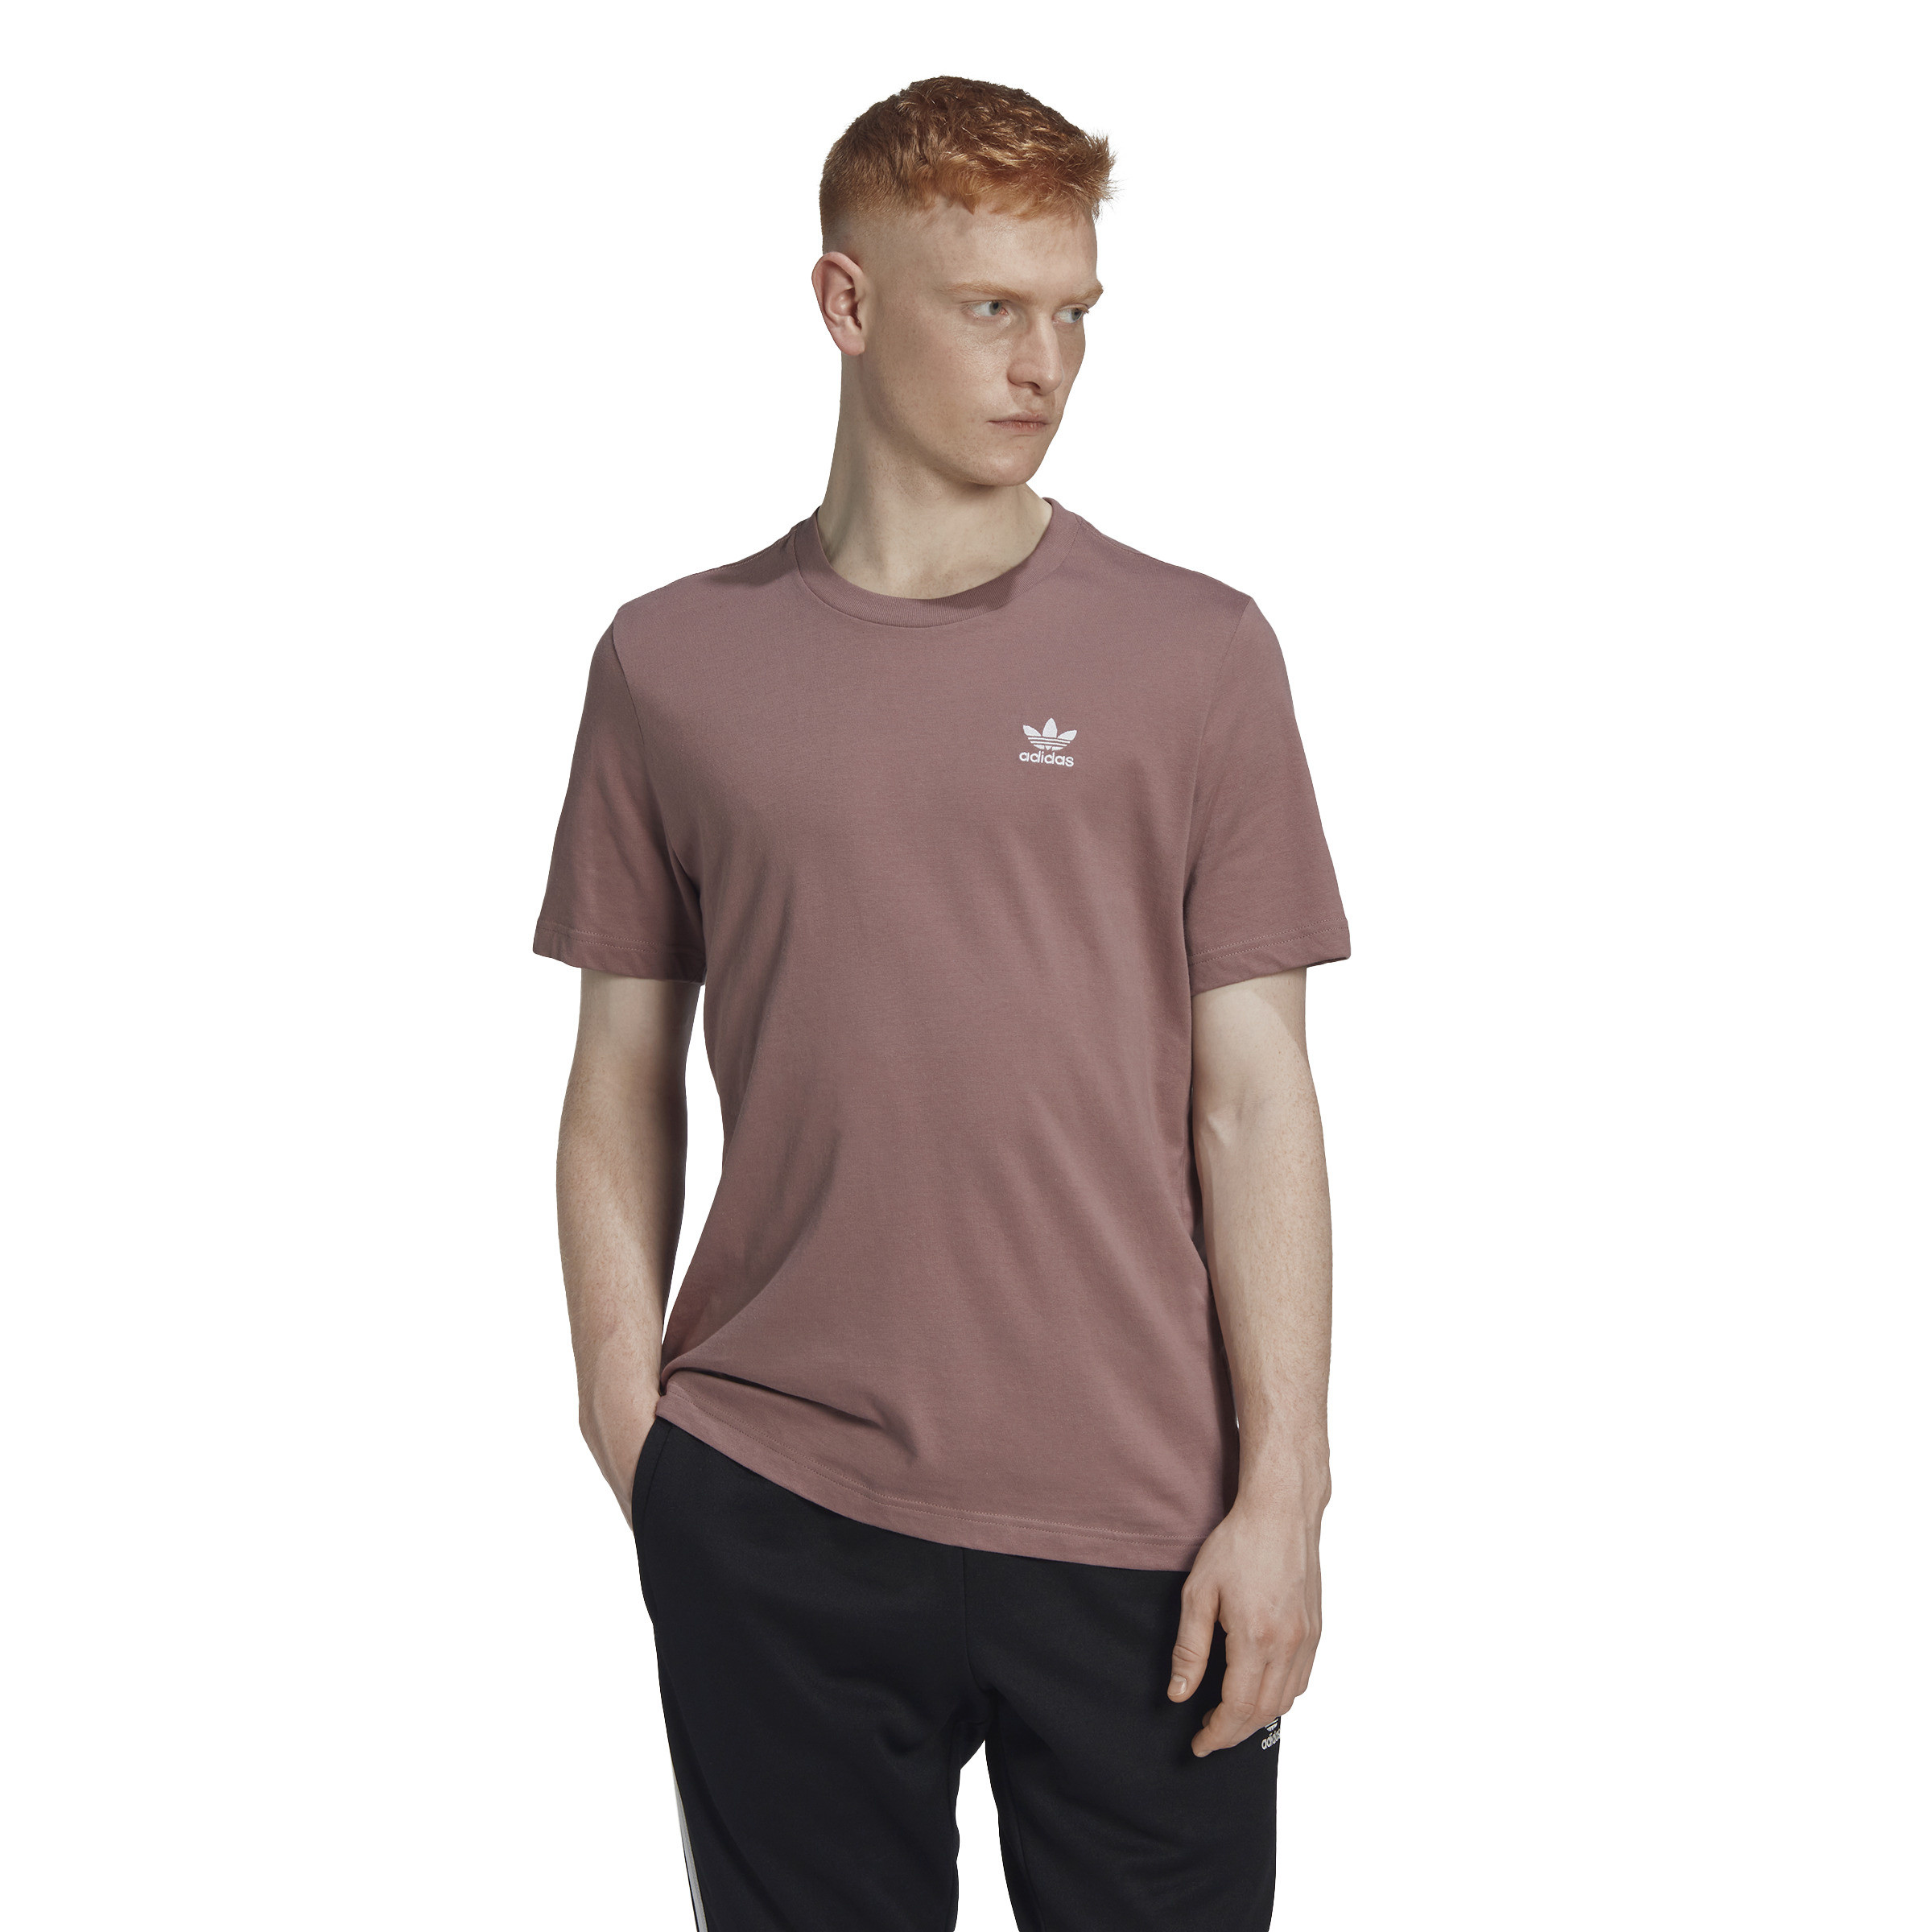 Adidas - T-shirt girocollo con logo, Rosa antico, large image number 4